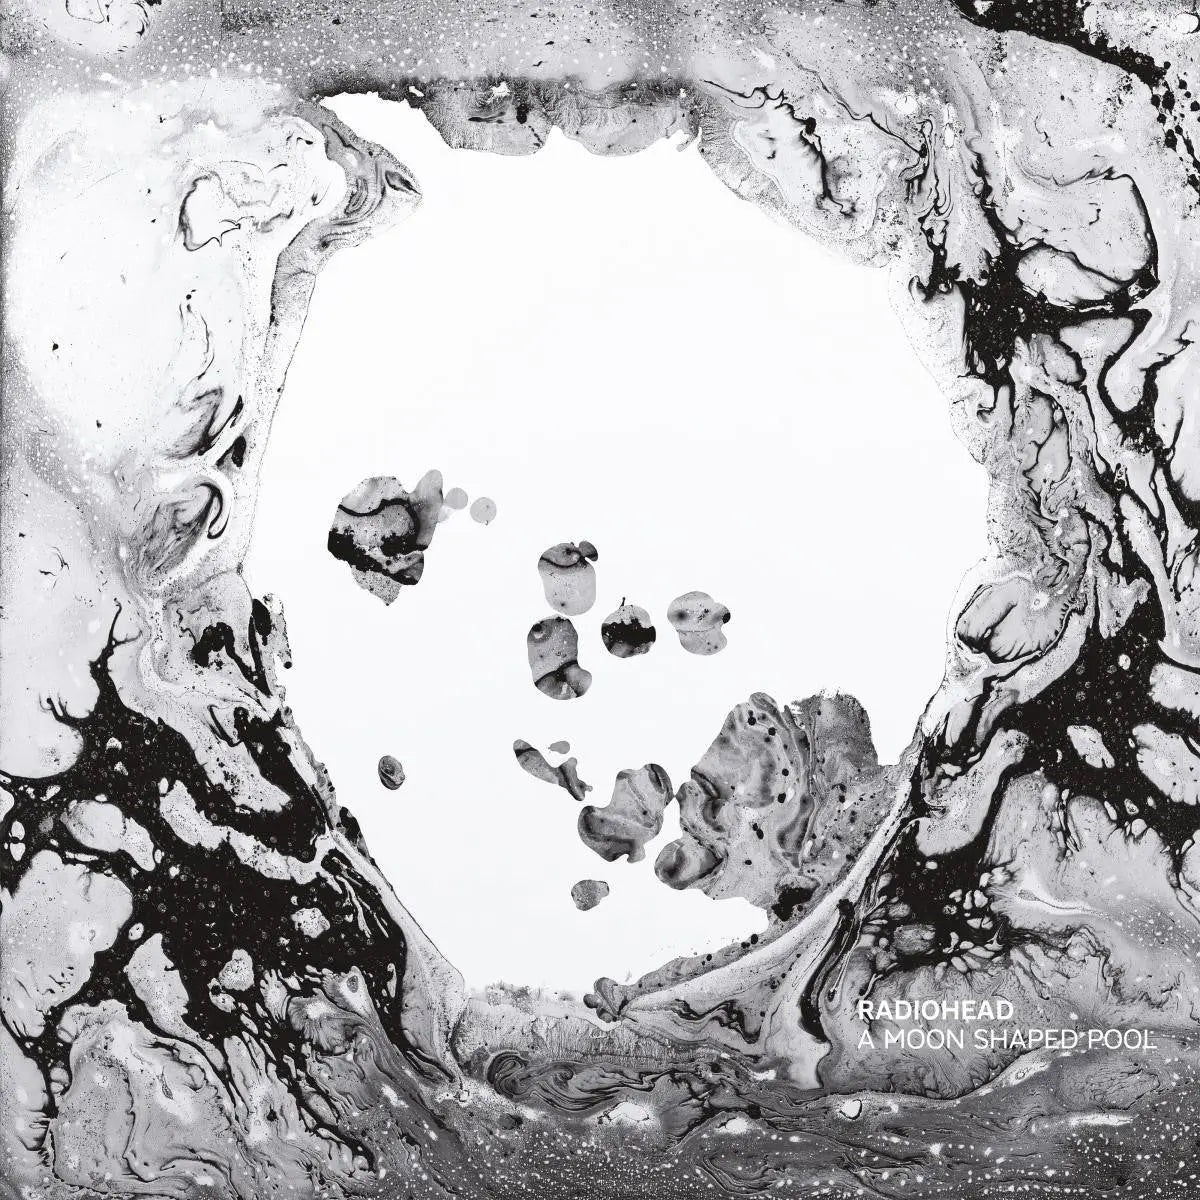 Radiohead - A Moon Shaped Pool [Vinyl]